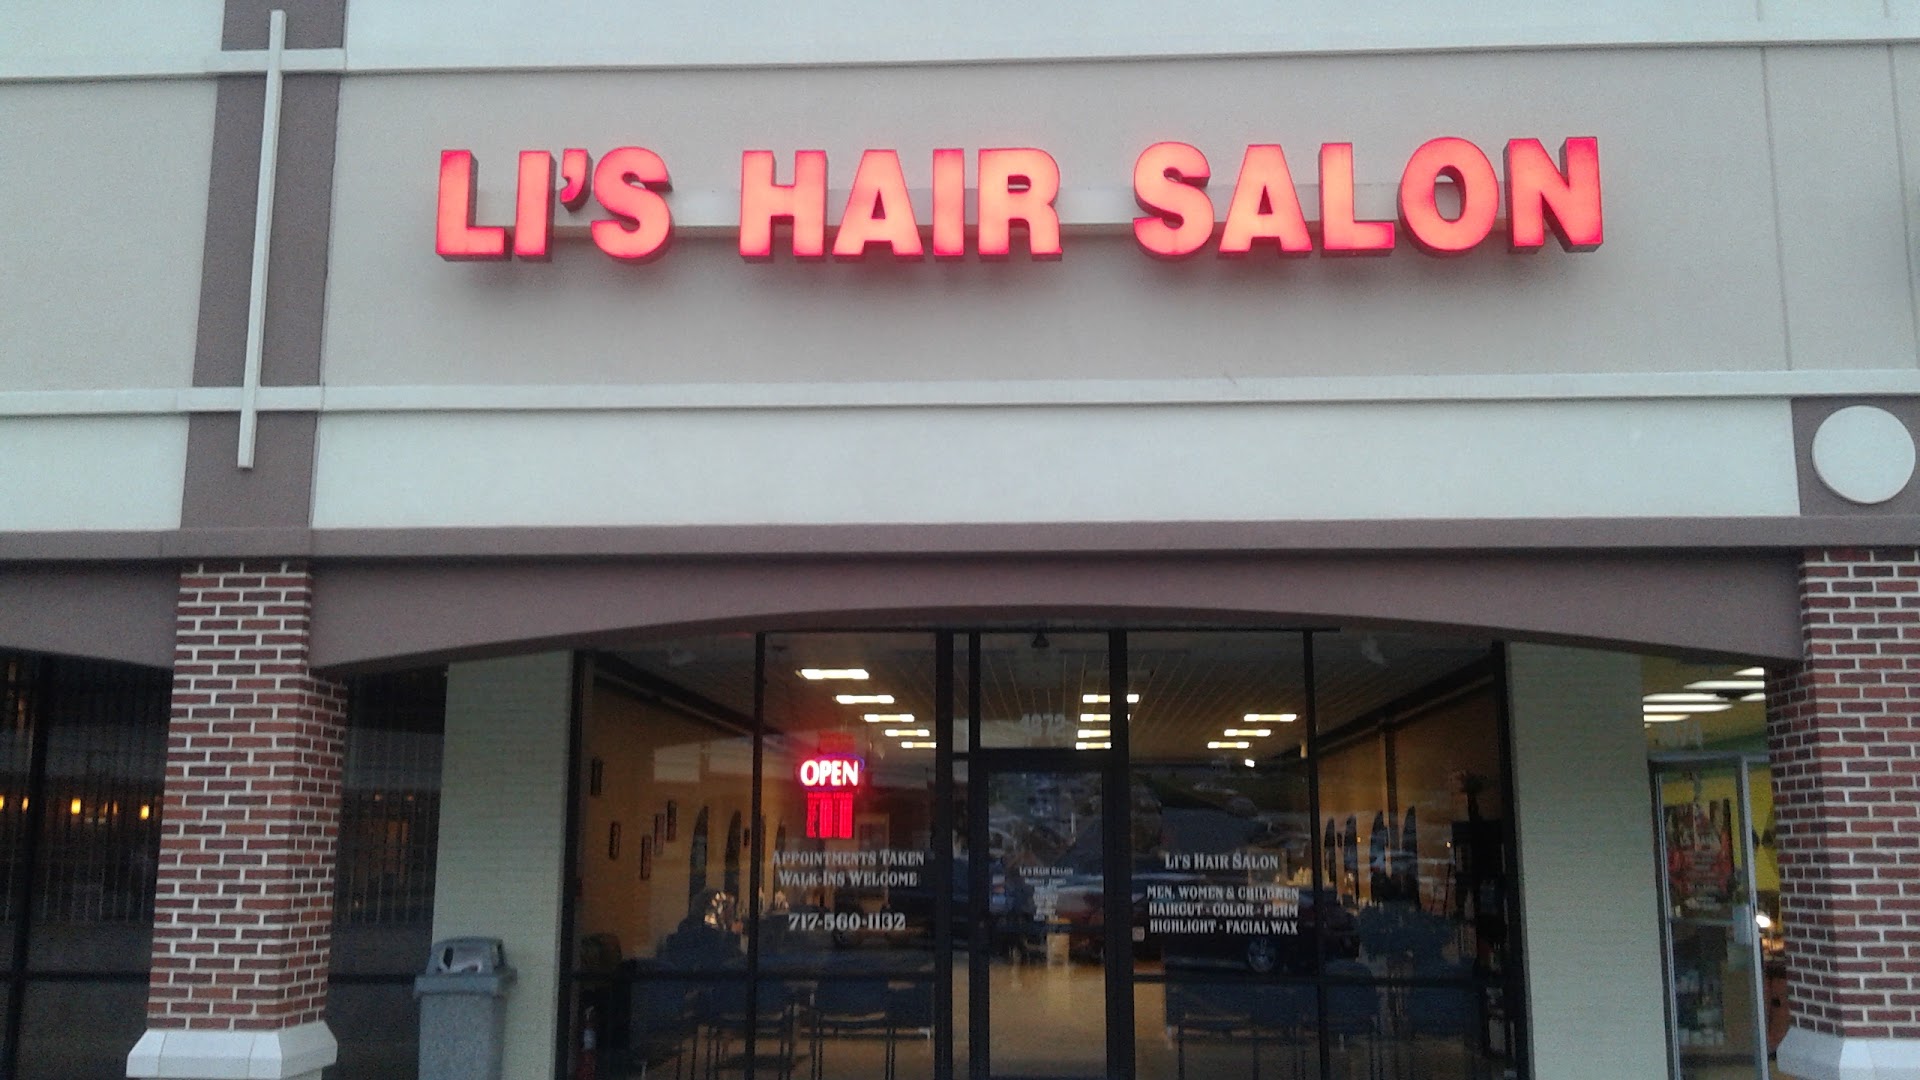 Li's Hair Salon